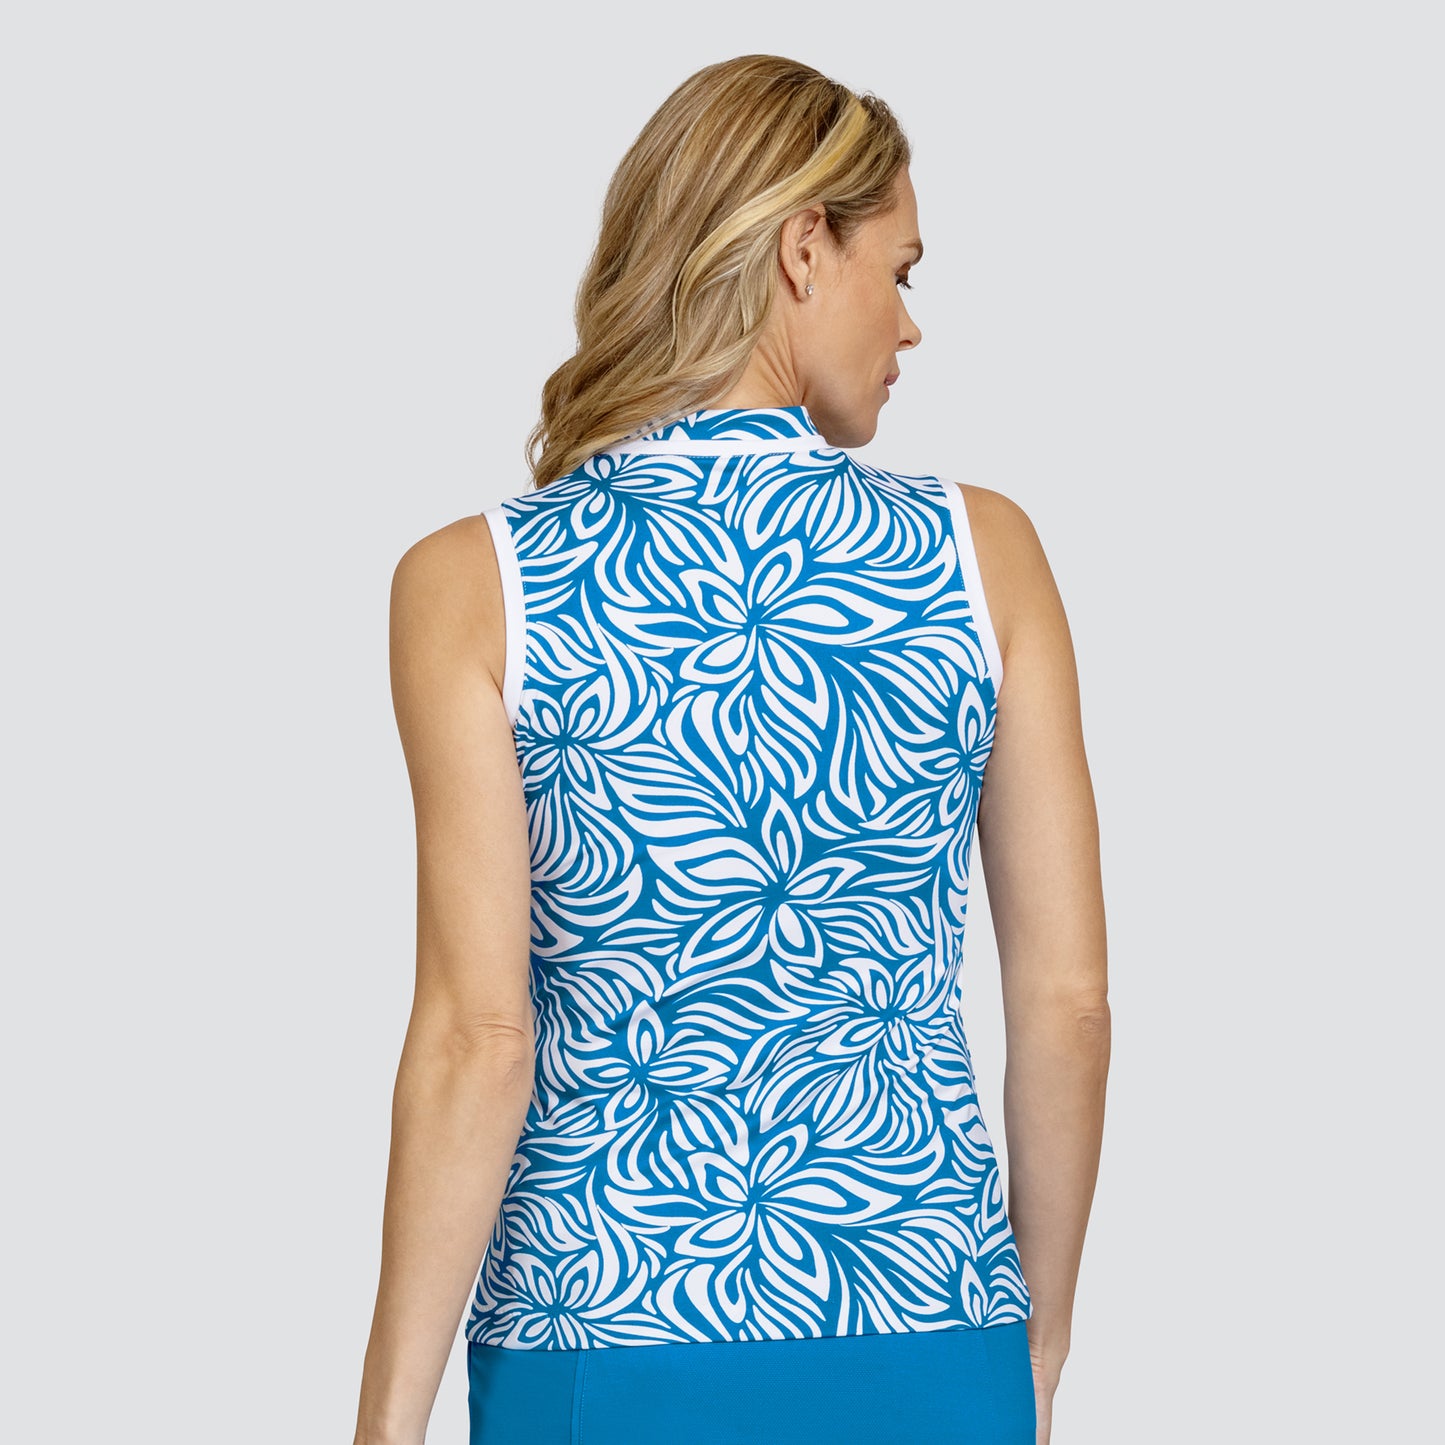 Tail Ladies Grecian Flower Print Sleeveless Golf Top